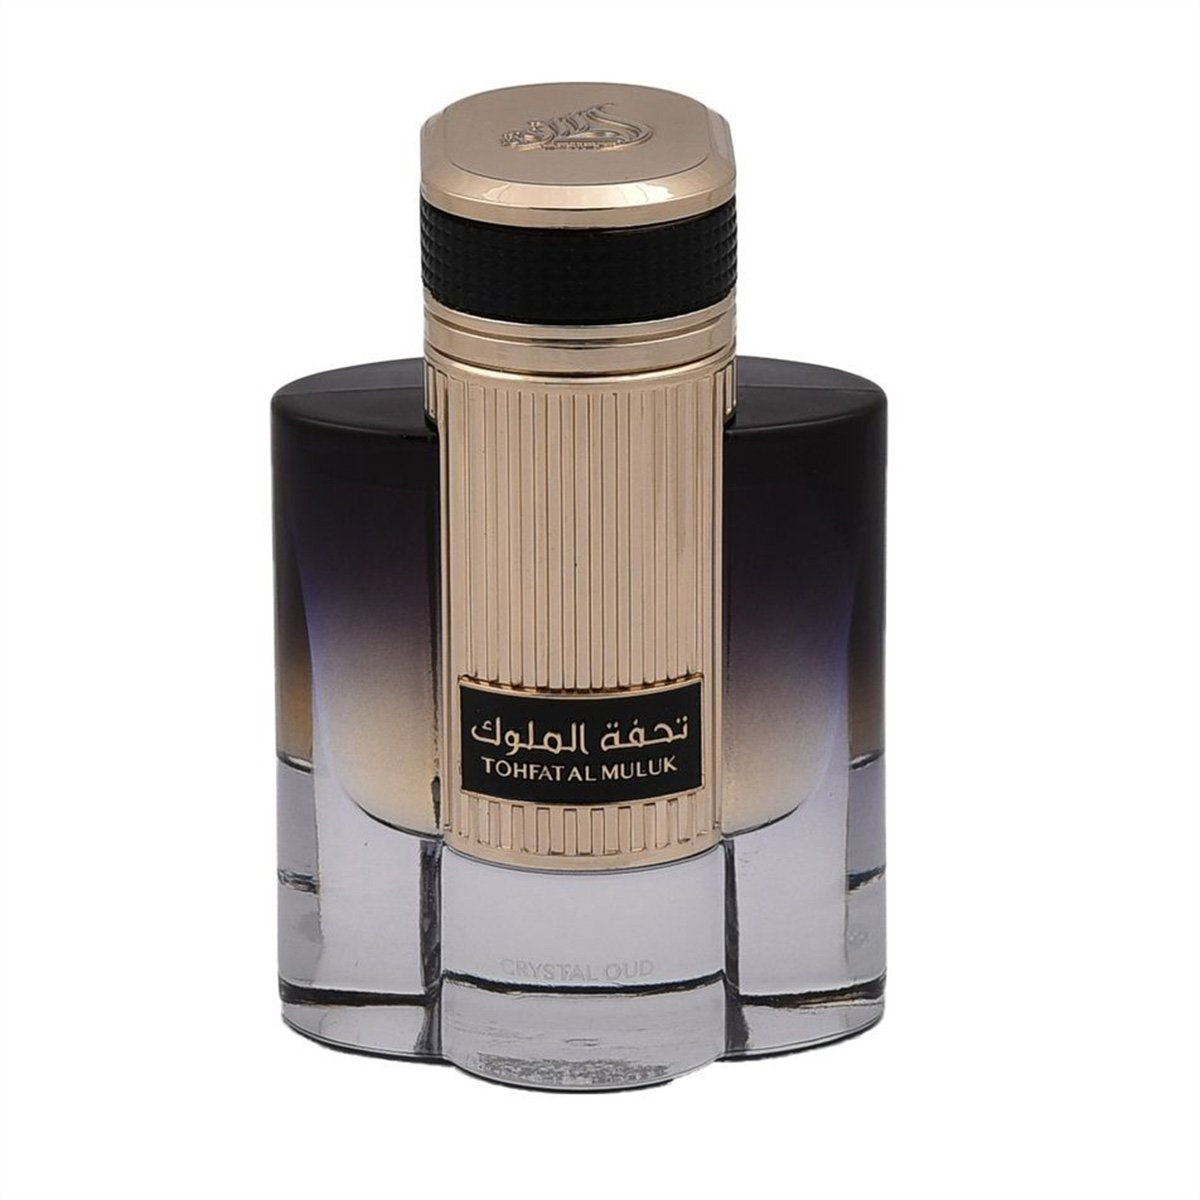 Tohfat Al Muluk Crystal Oud Eau De Parfum 80ml Lattafa-almanaar Islamic Store